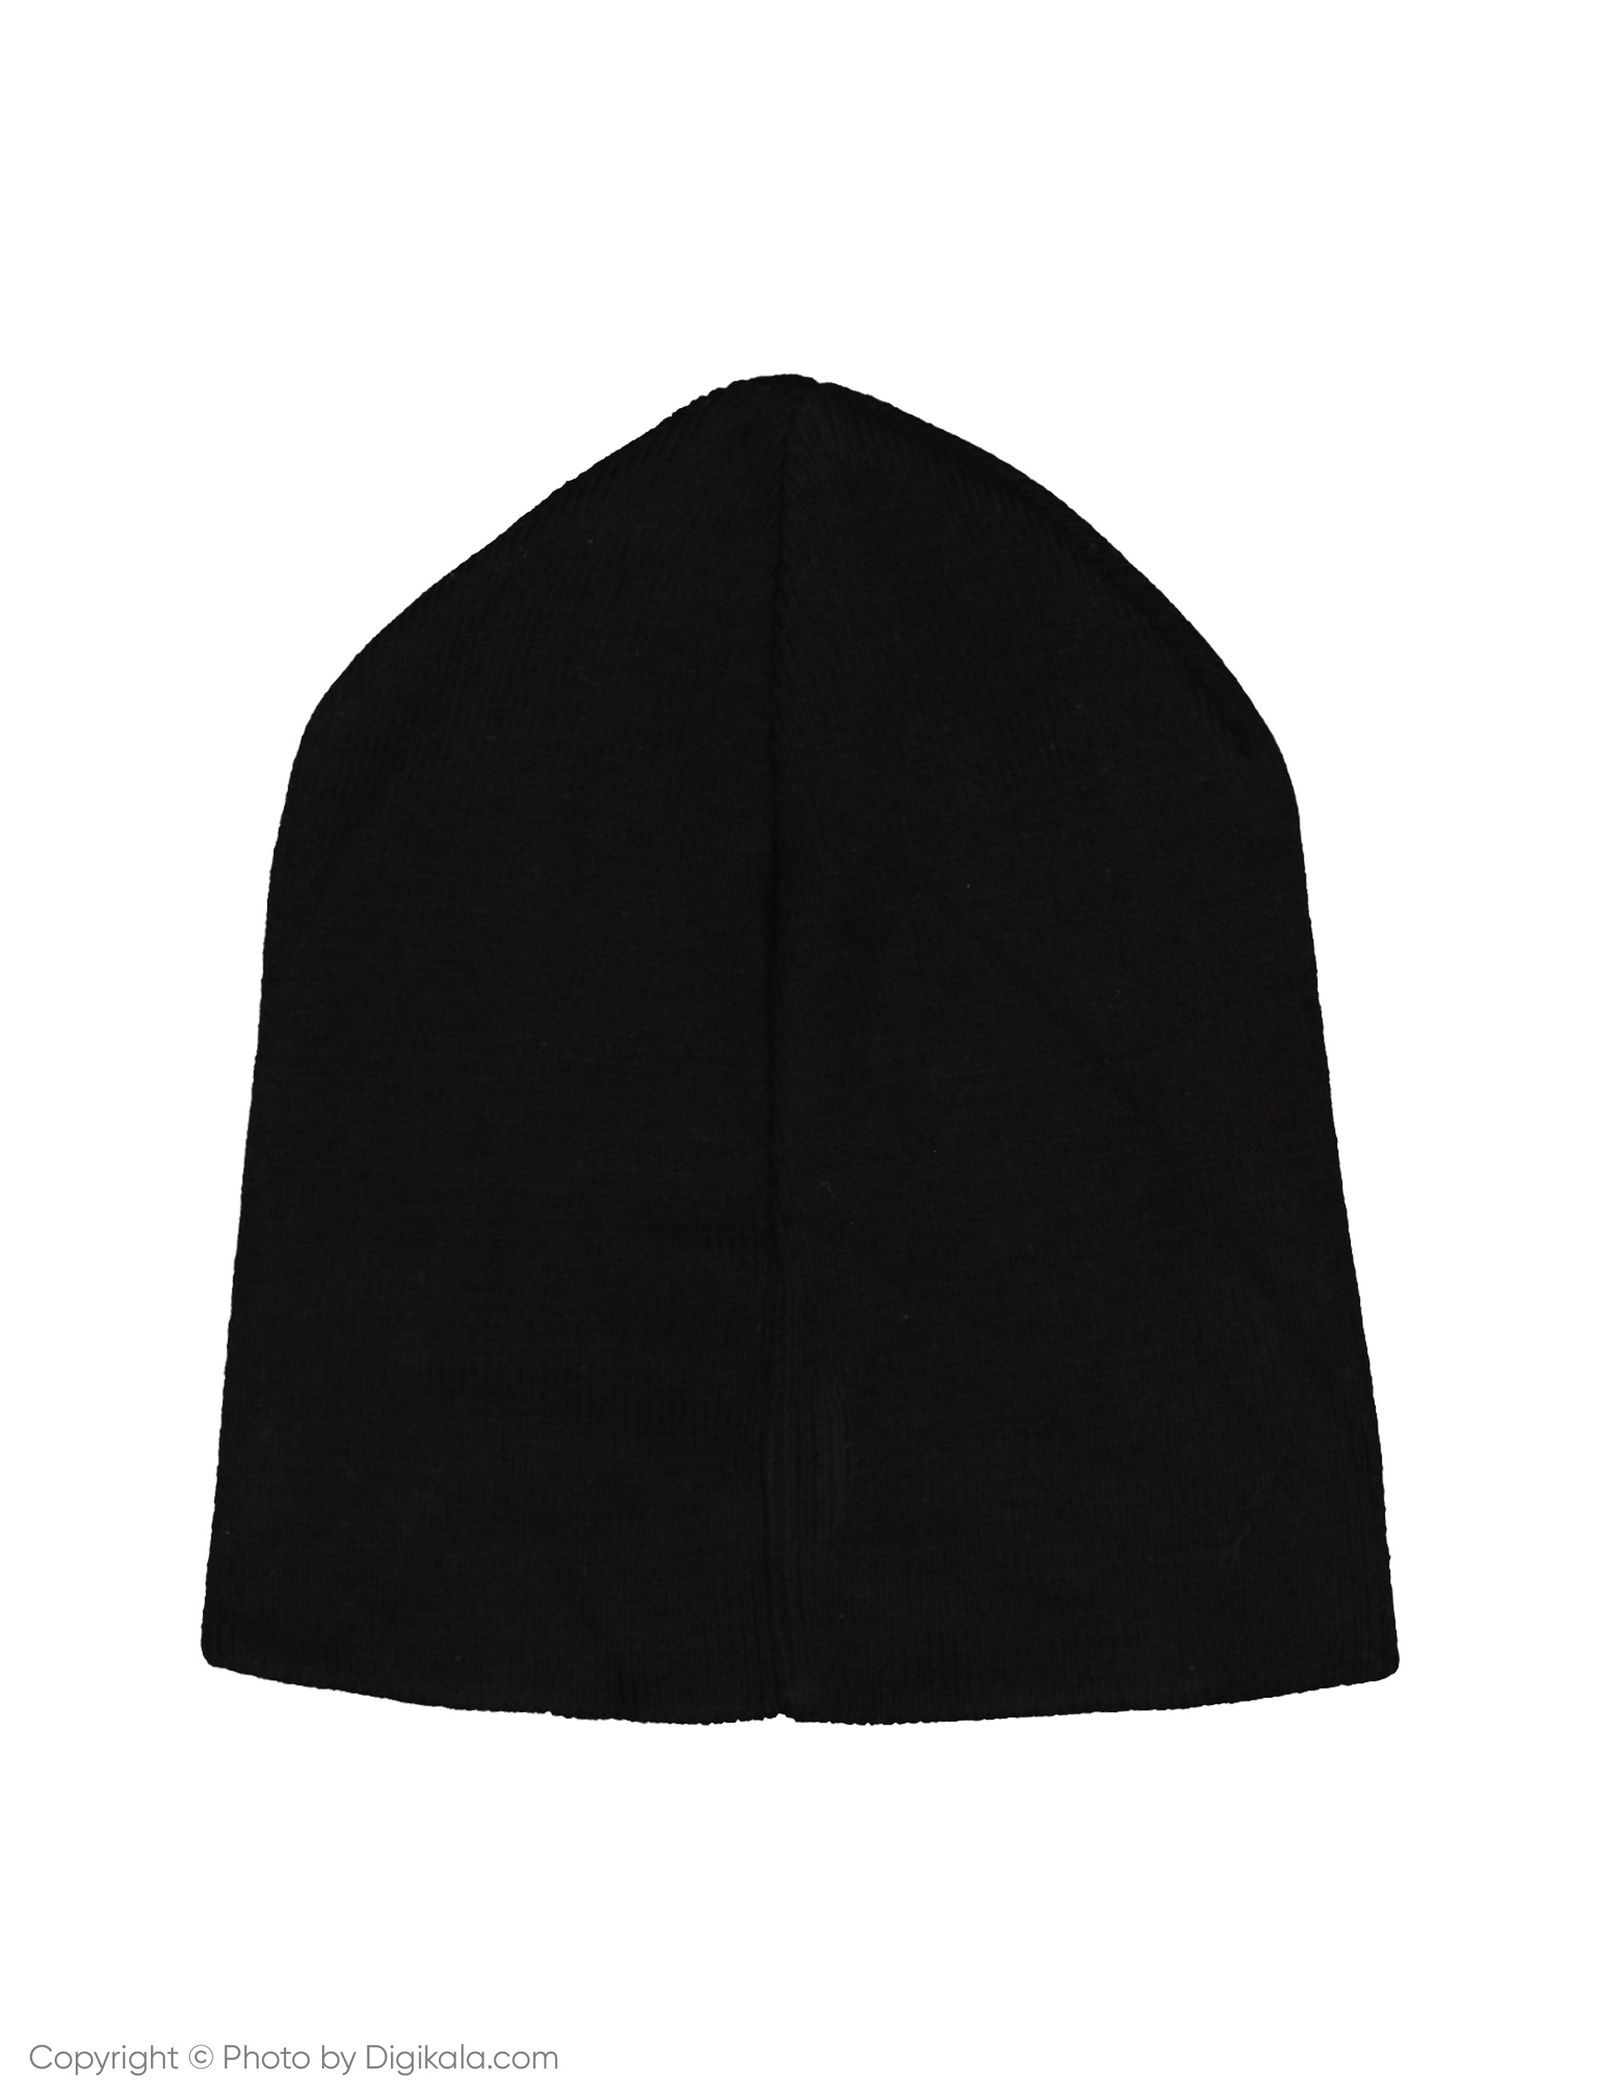 کلاه زنانه کالینز مدل CL1036891-BLACK - مشکی - 4